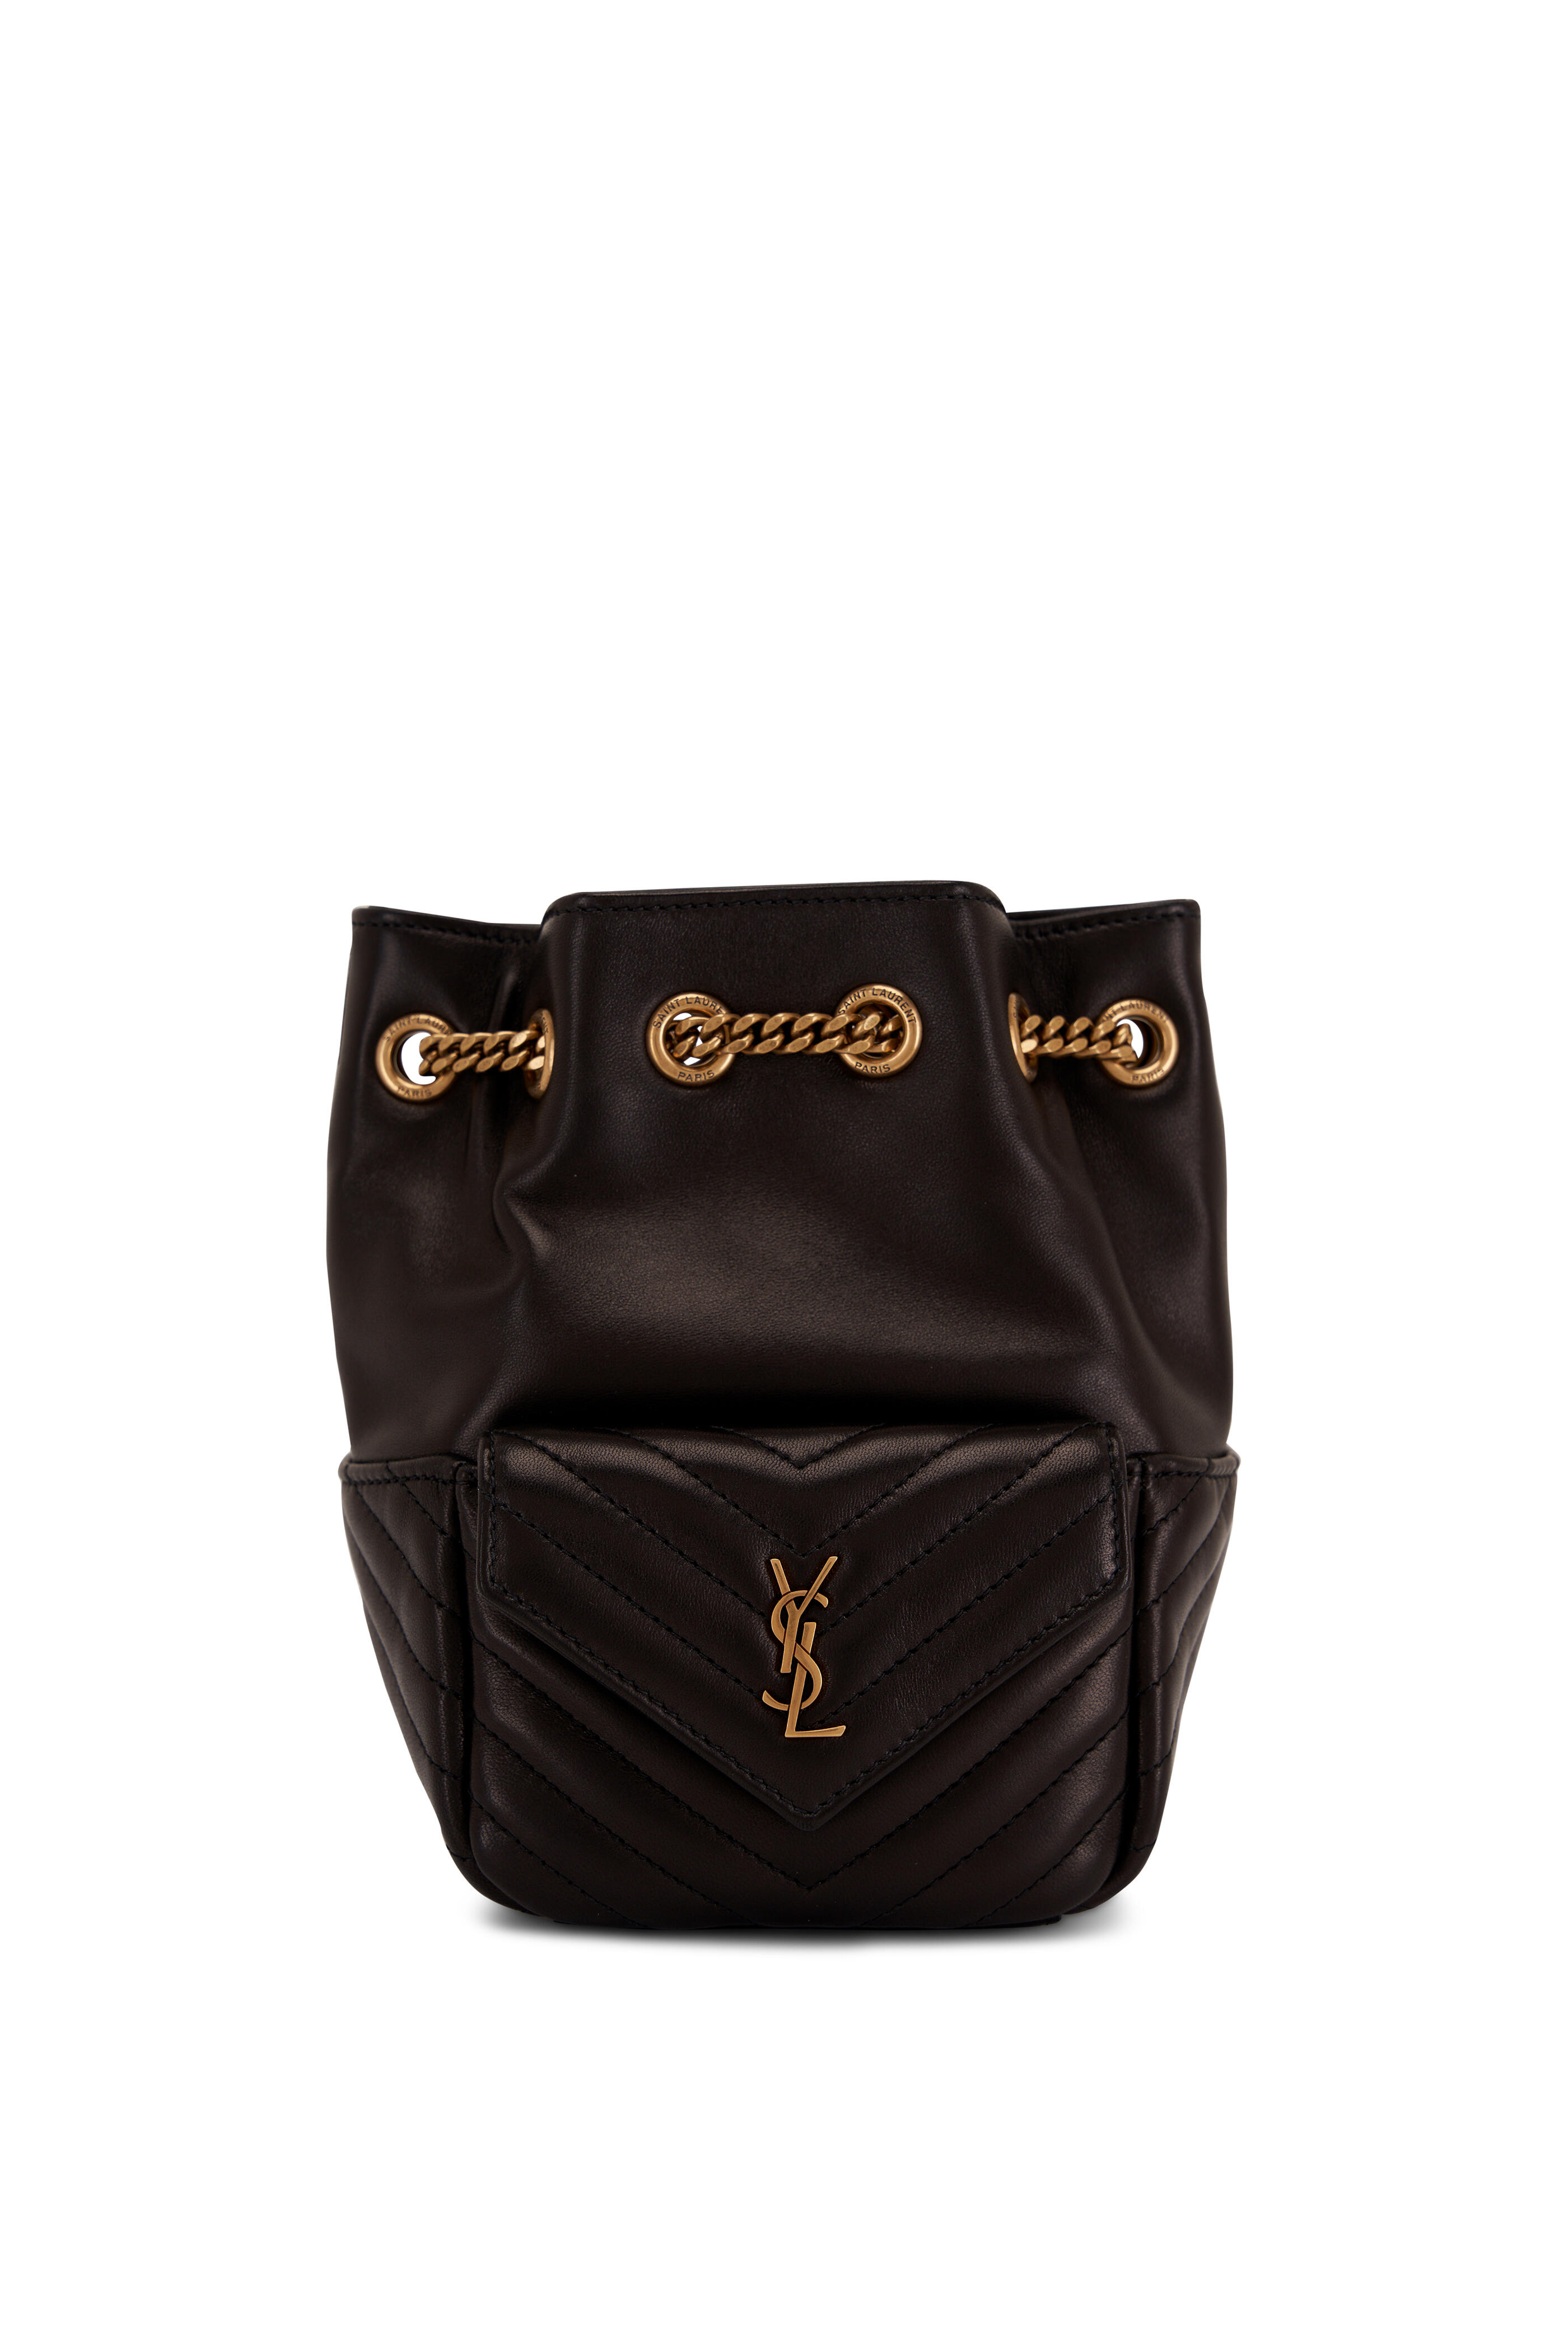 Saint Laurent Leather Monogram Bucket Bag